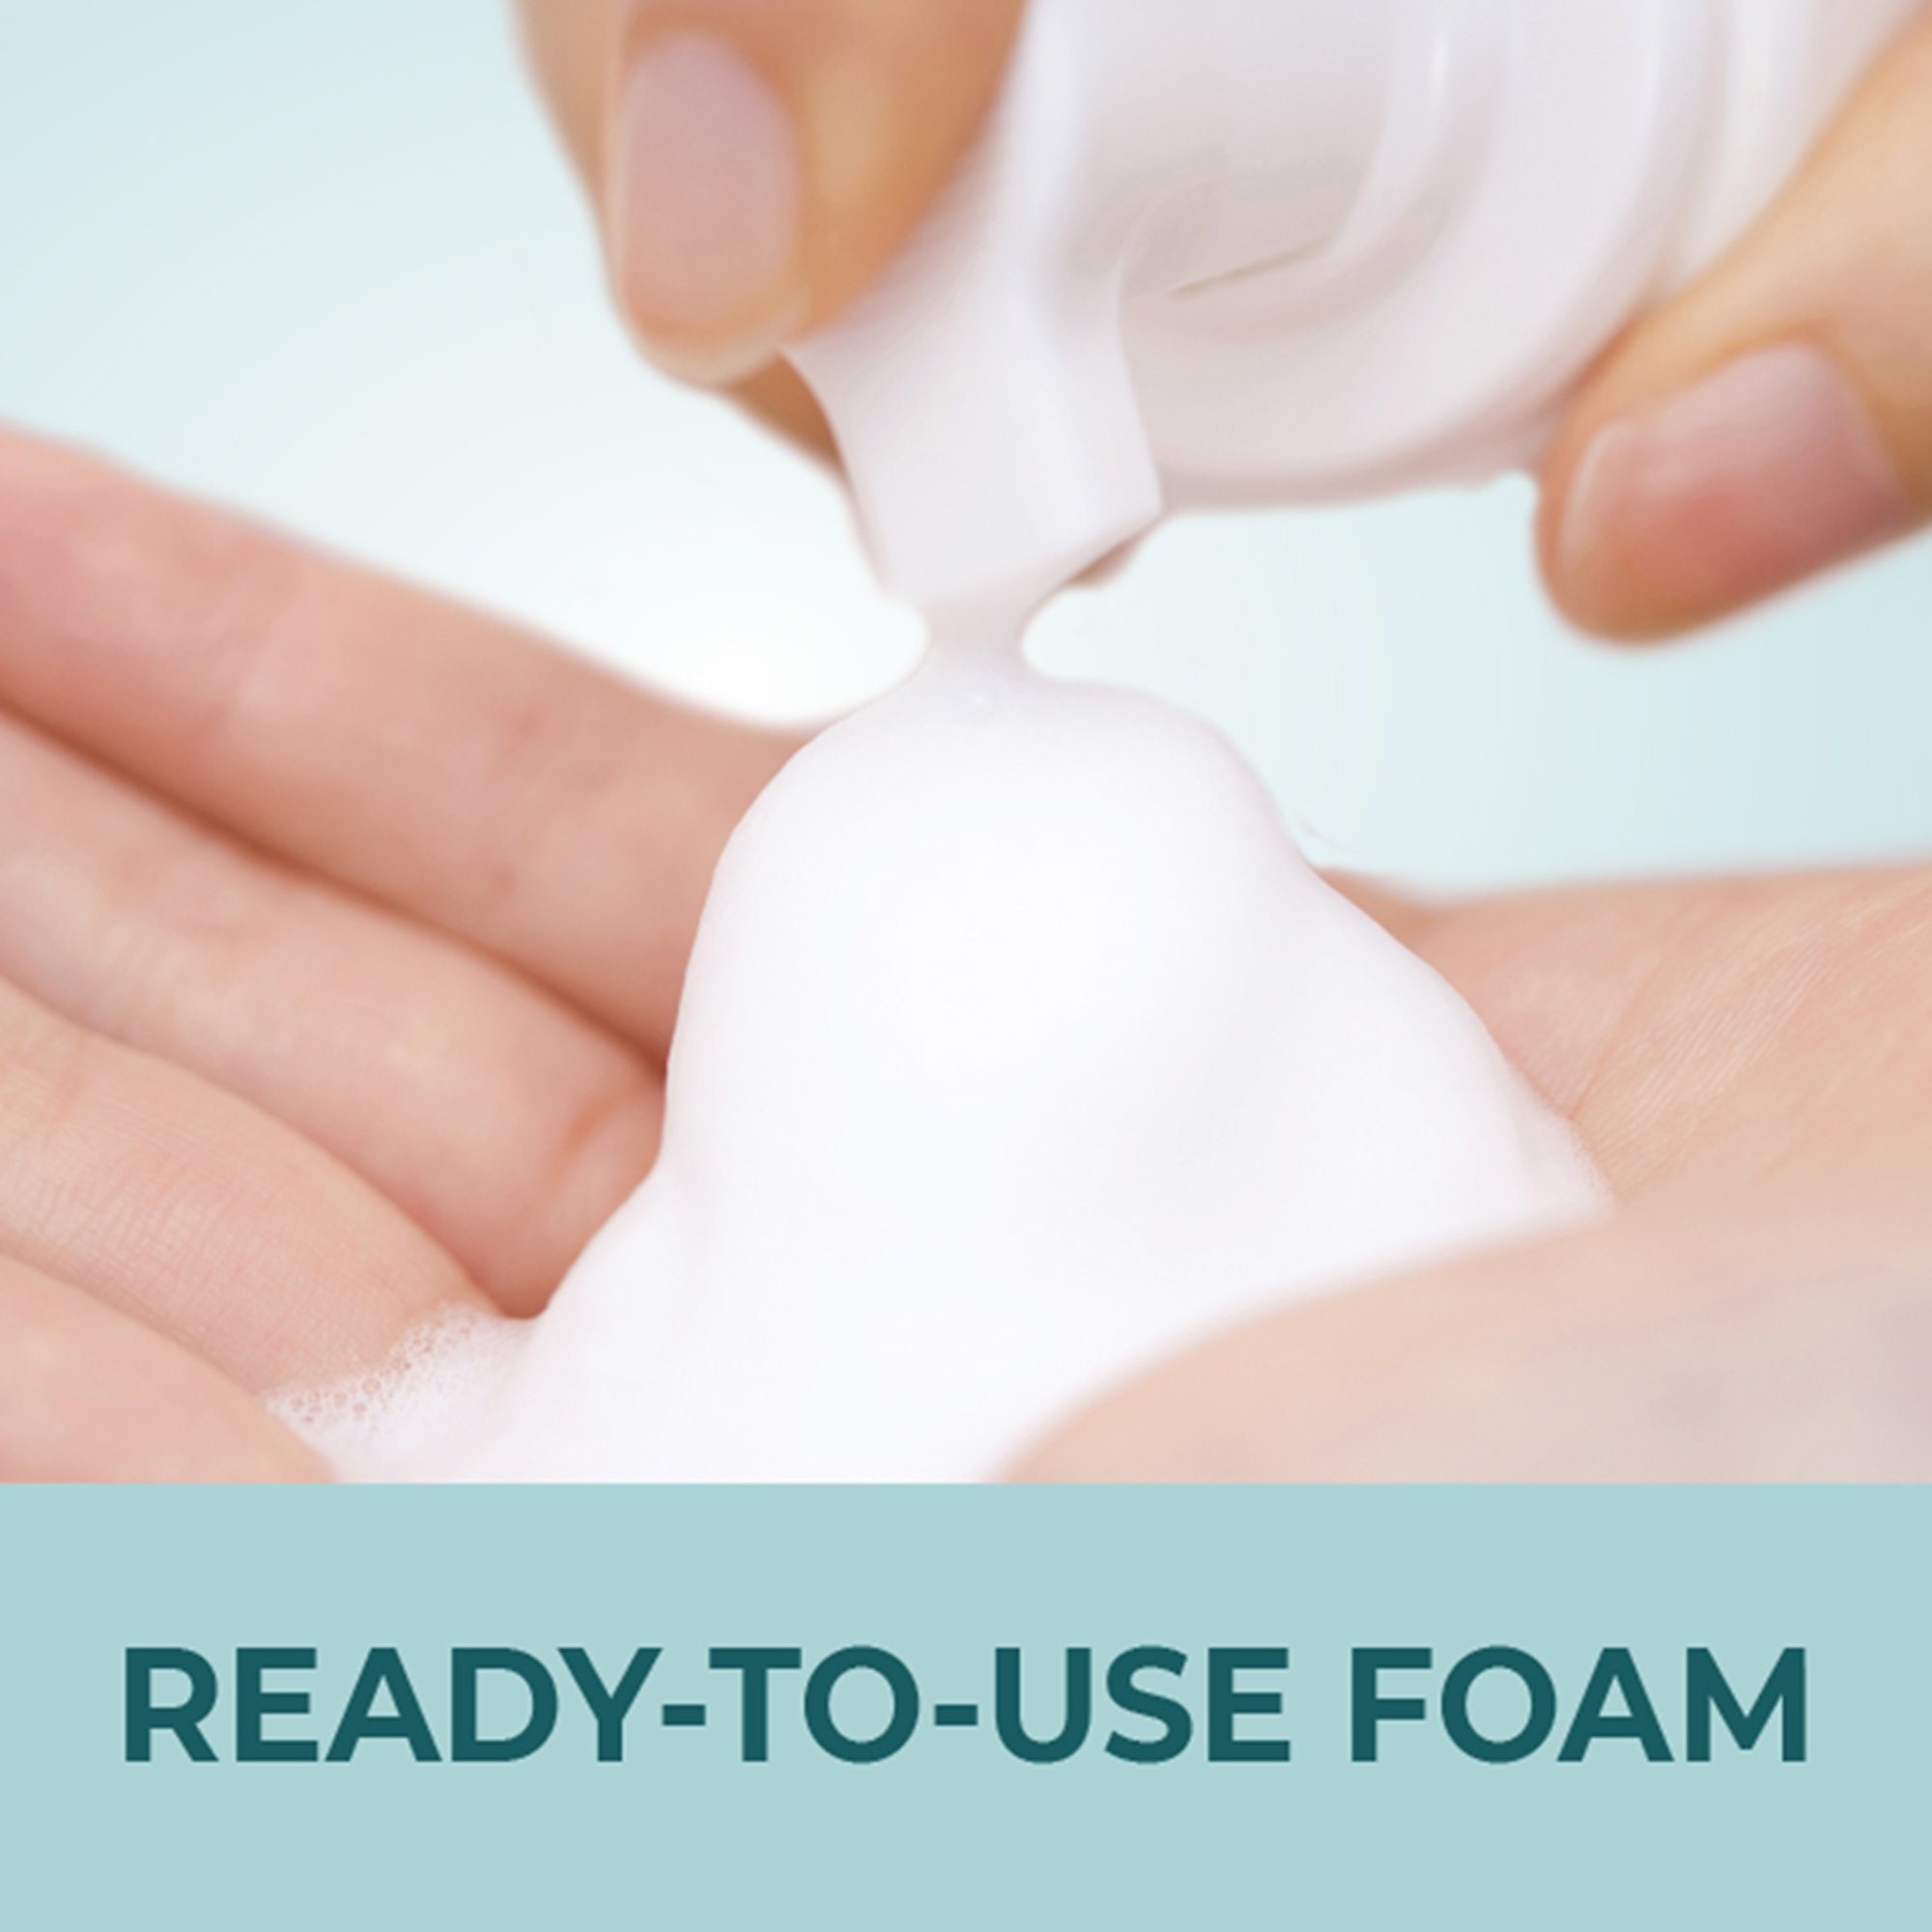 Himalaya Oil Clear Lemon Foaming Face Wash - Ready-to-use foam